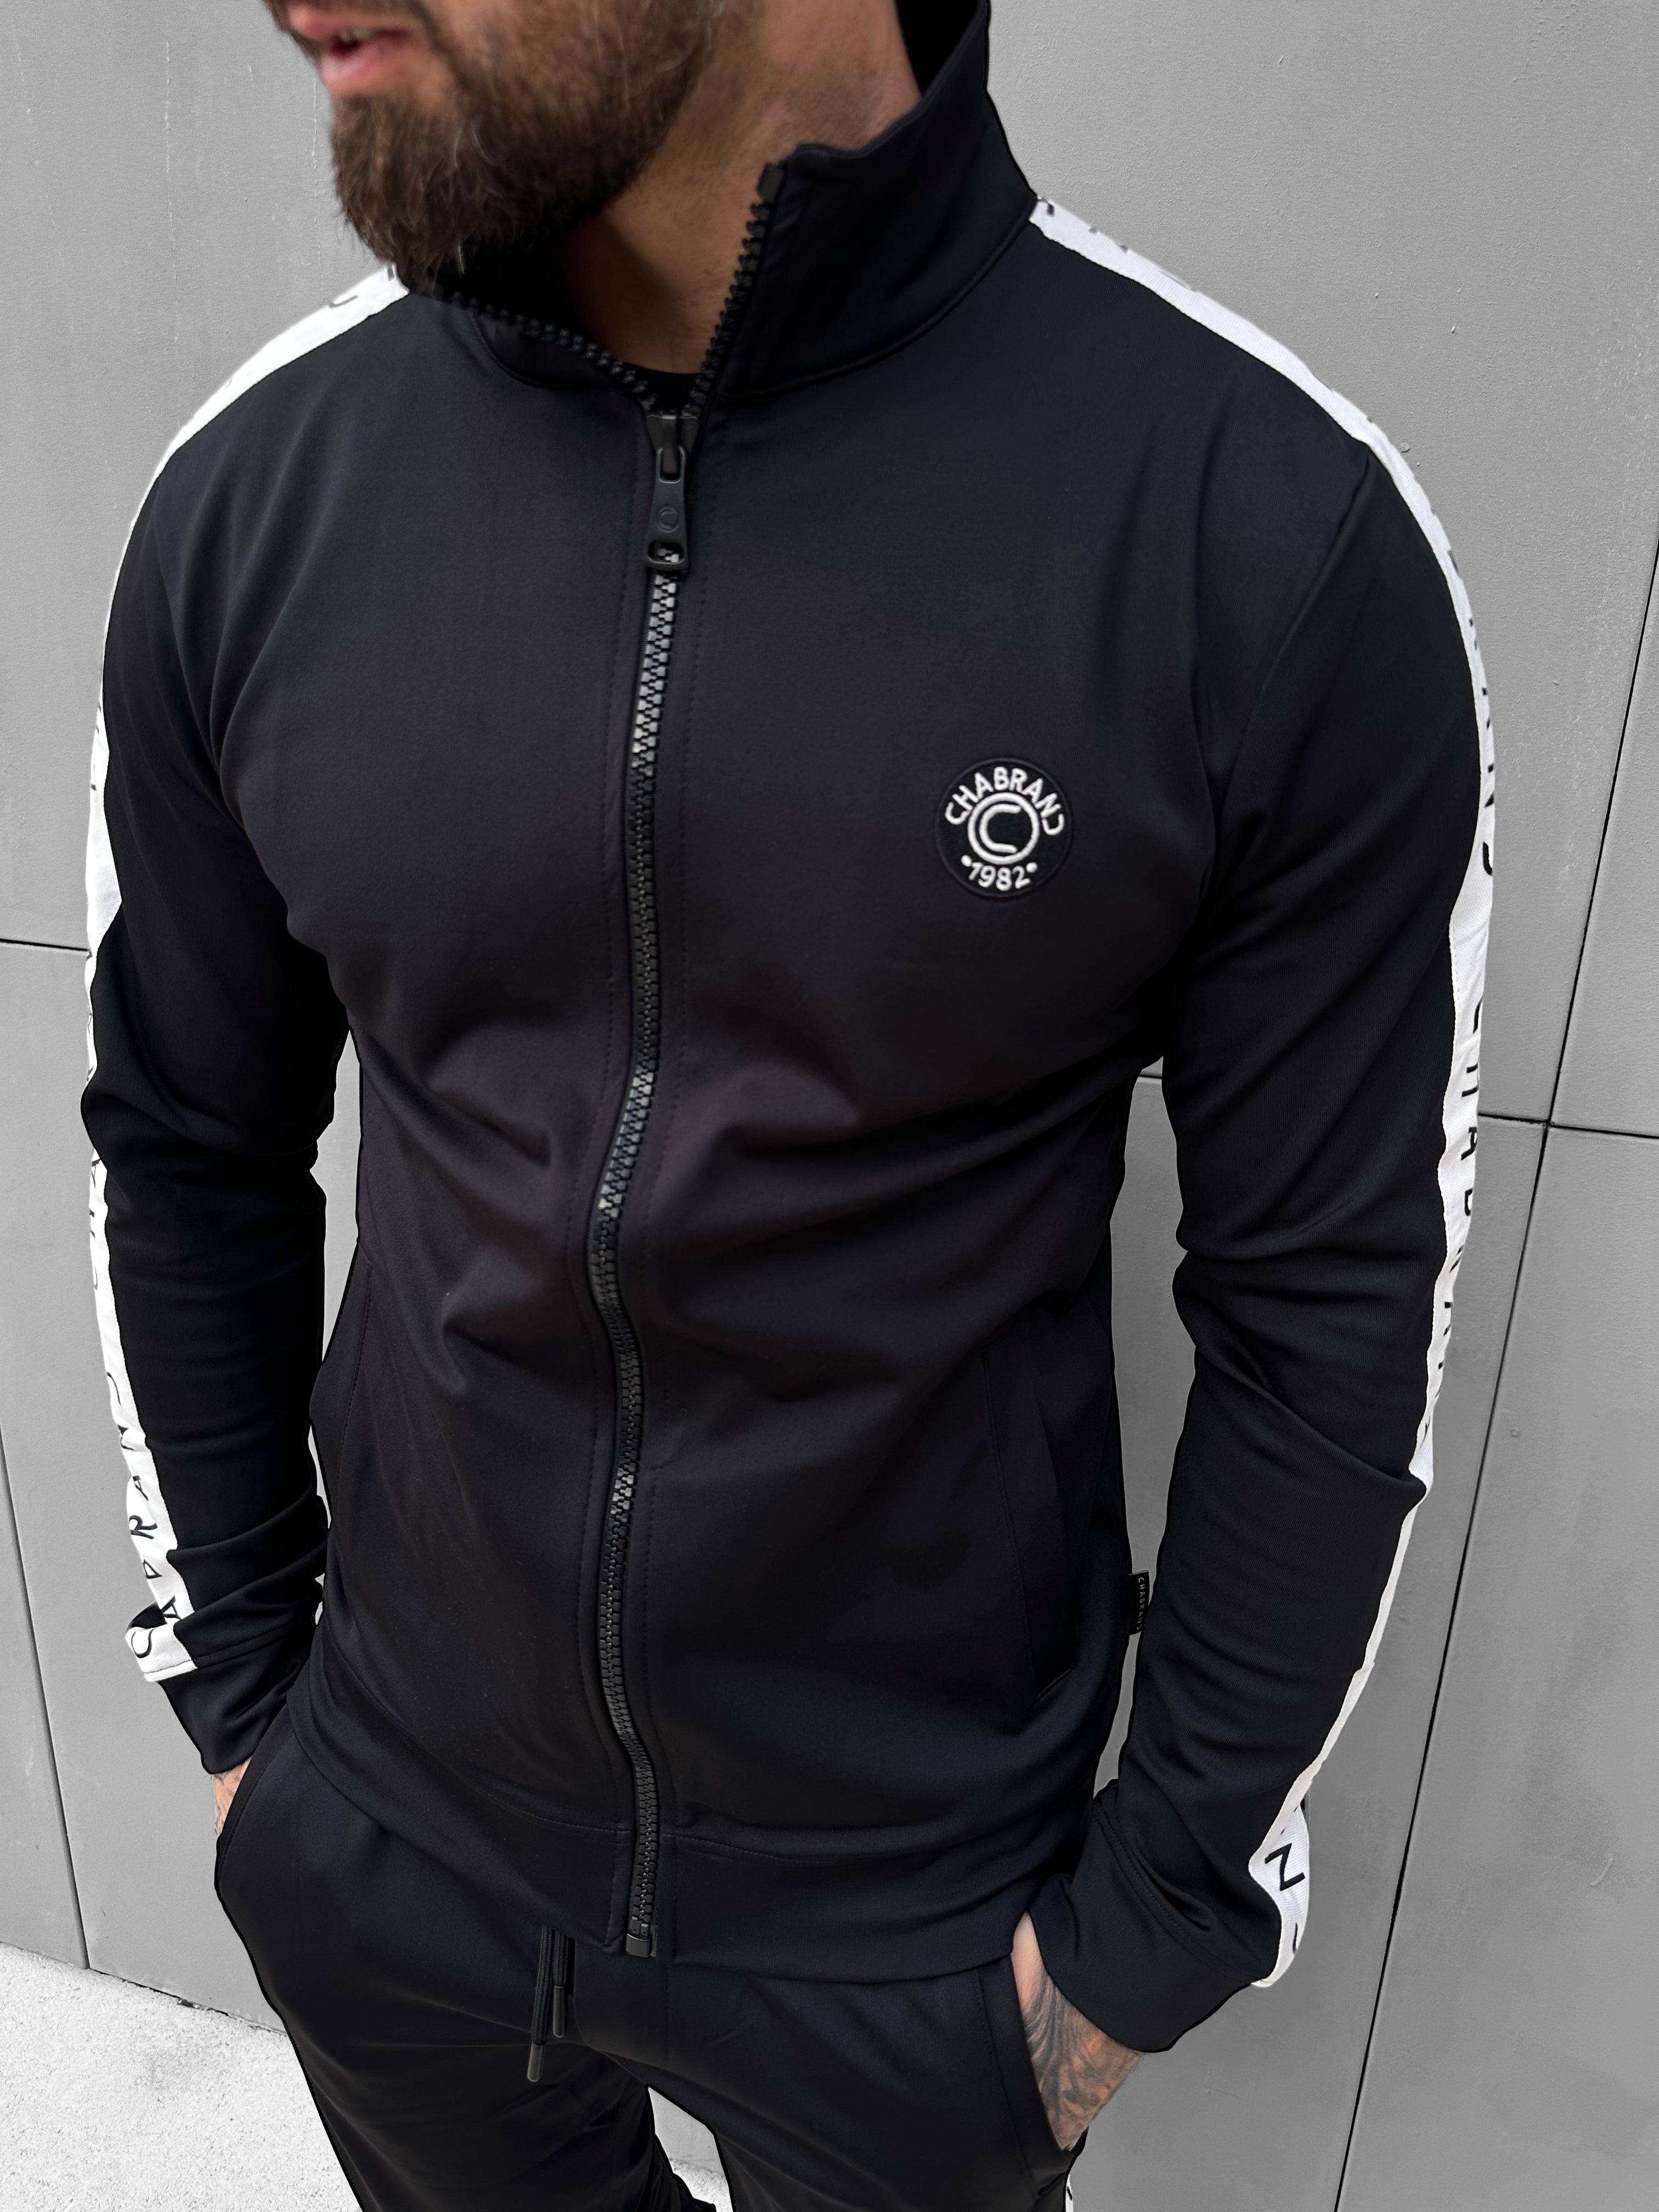 CHABRAND - Black jogging jacket with white stripe